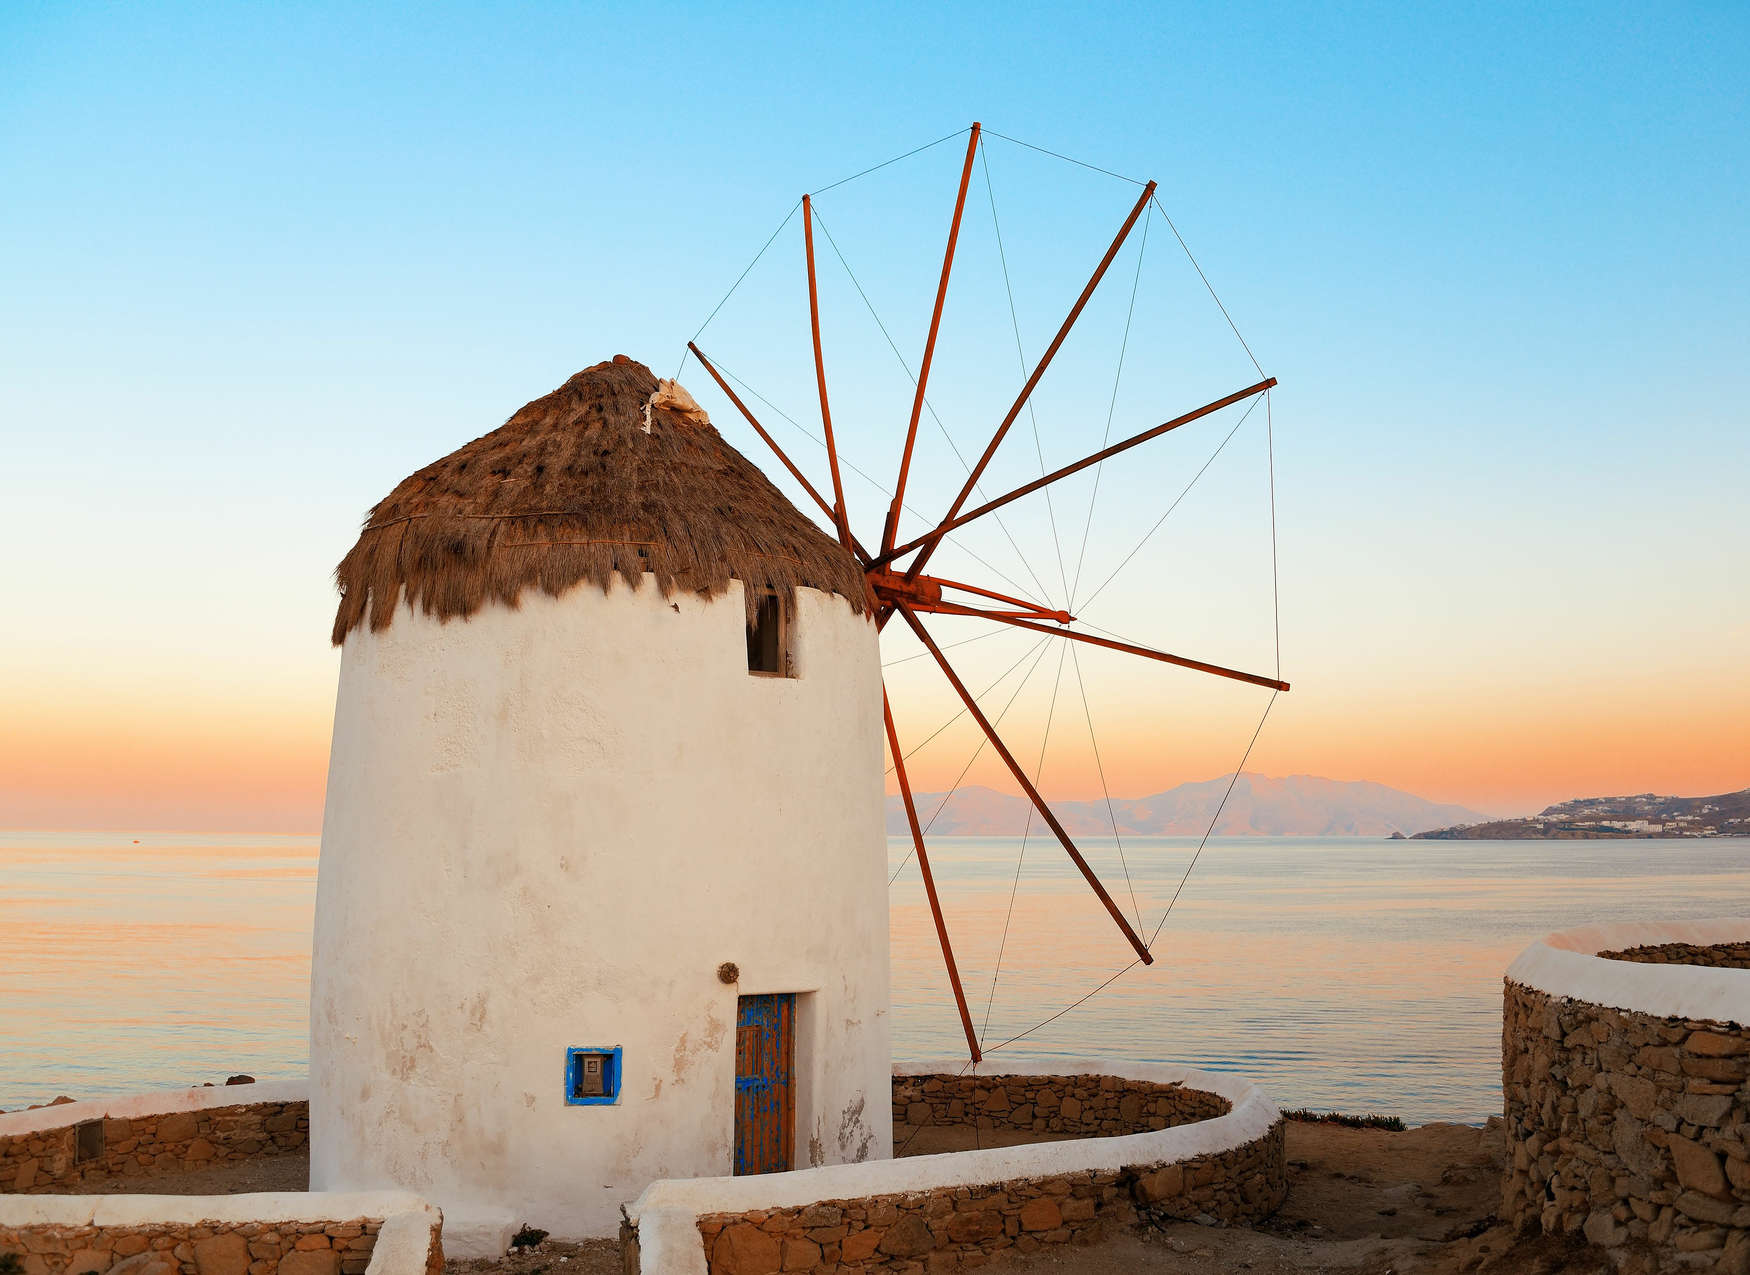             Photo wallpaper Greek windmill on the coast - Blue, Orange, Beige
        